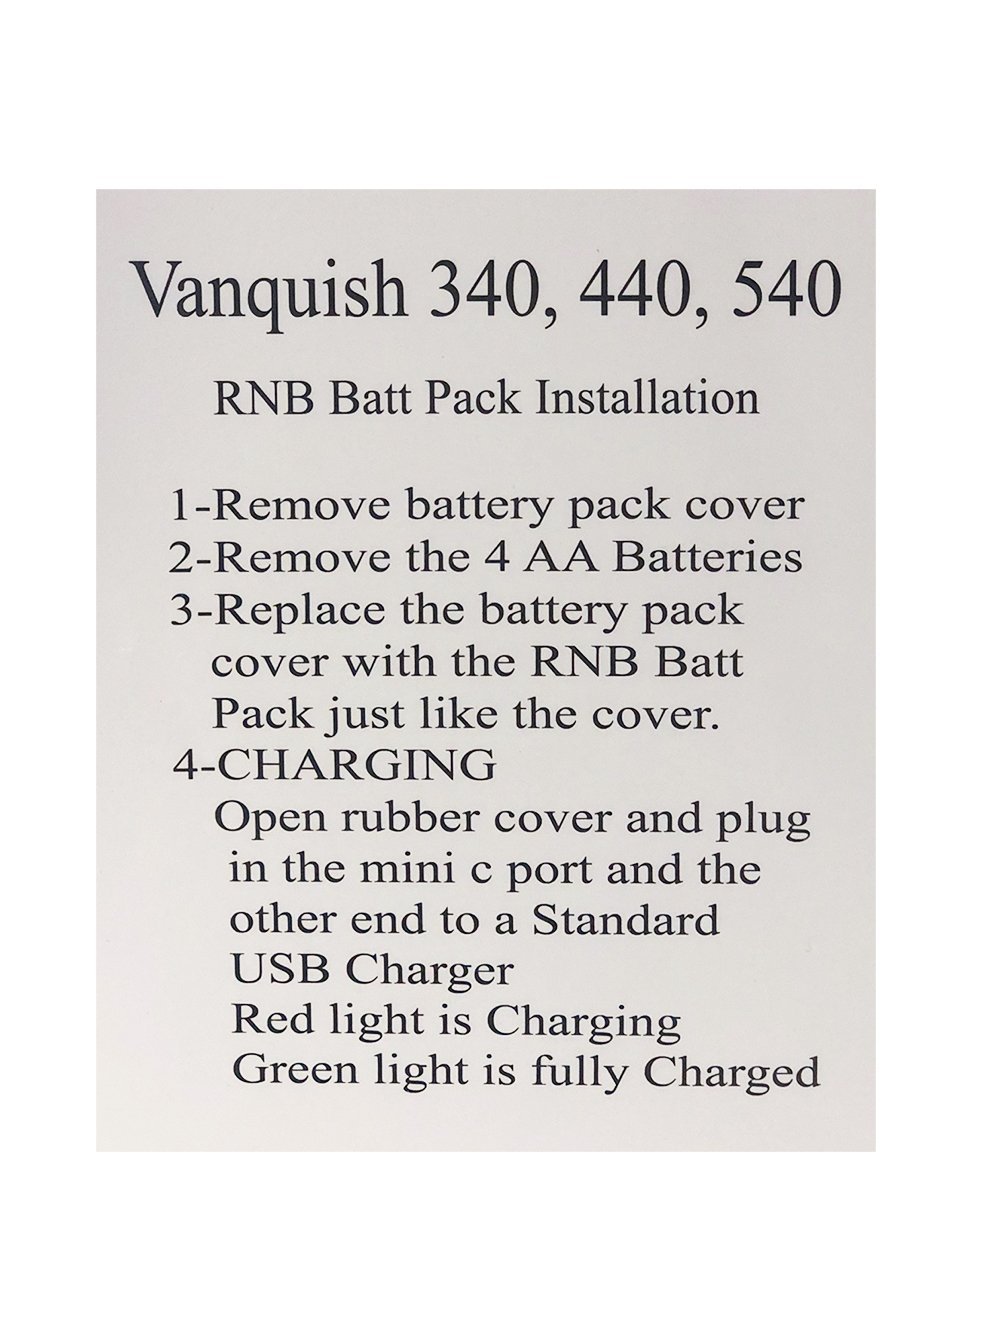 RNB-6000 Vanquish Battery